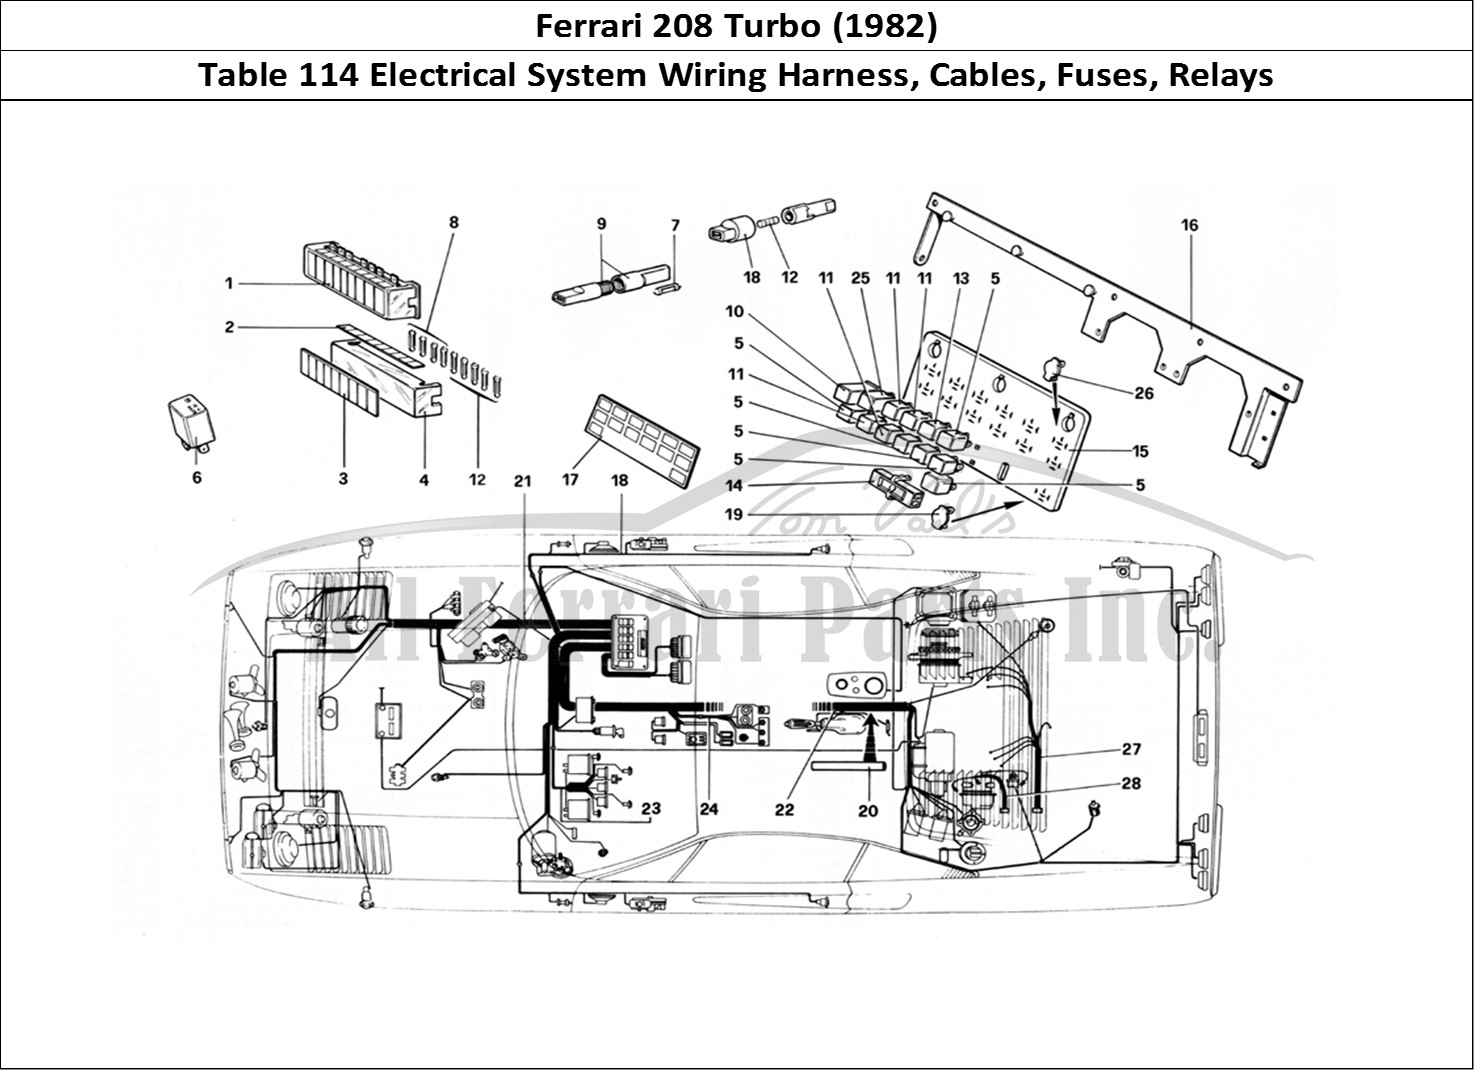 Ferrari Parts Ferrari 208 Turbo (1982) Page 114 Electrical System - Cable